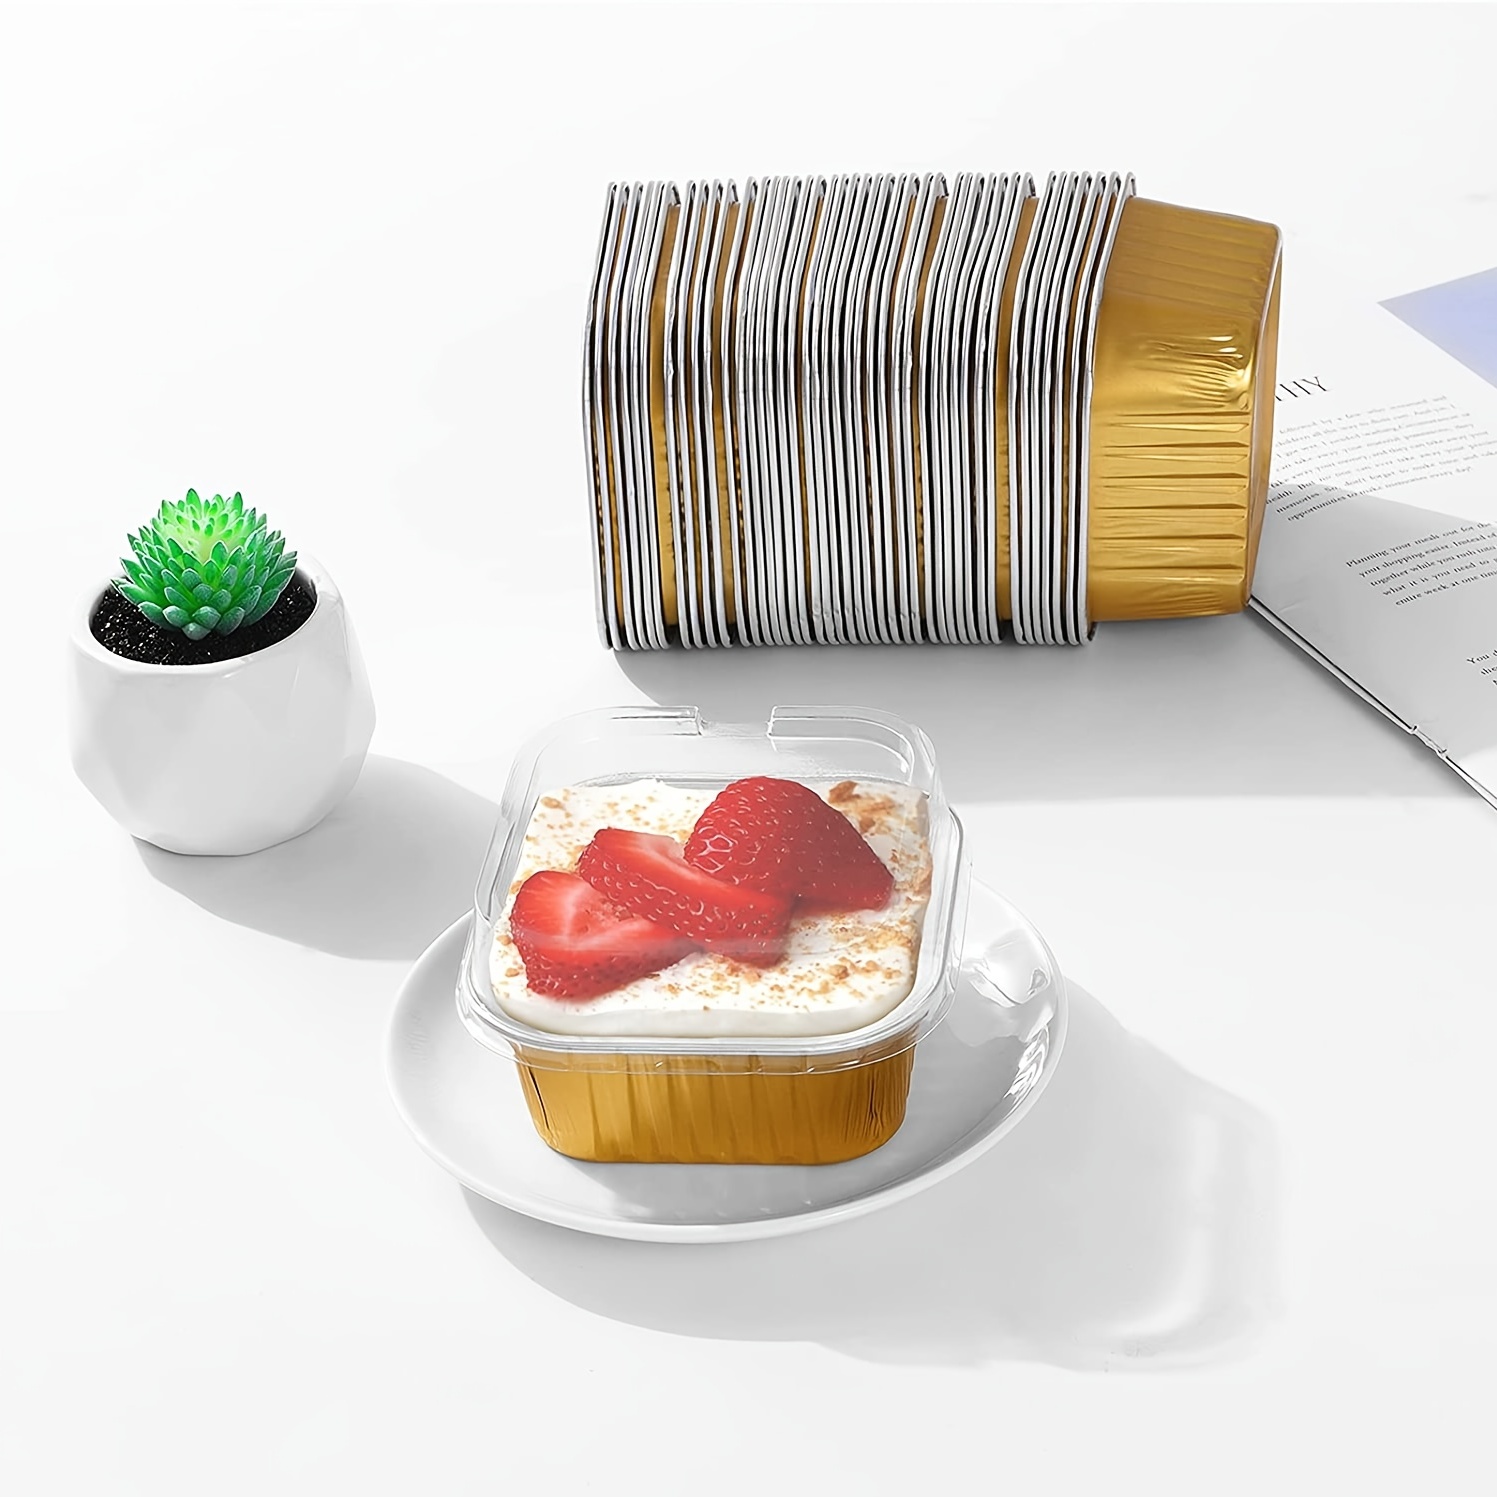 Aluminum Foil Mini Baking Cup 1.7 oz. - Sweet Flavor